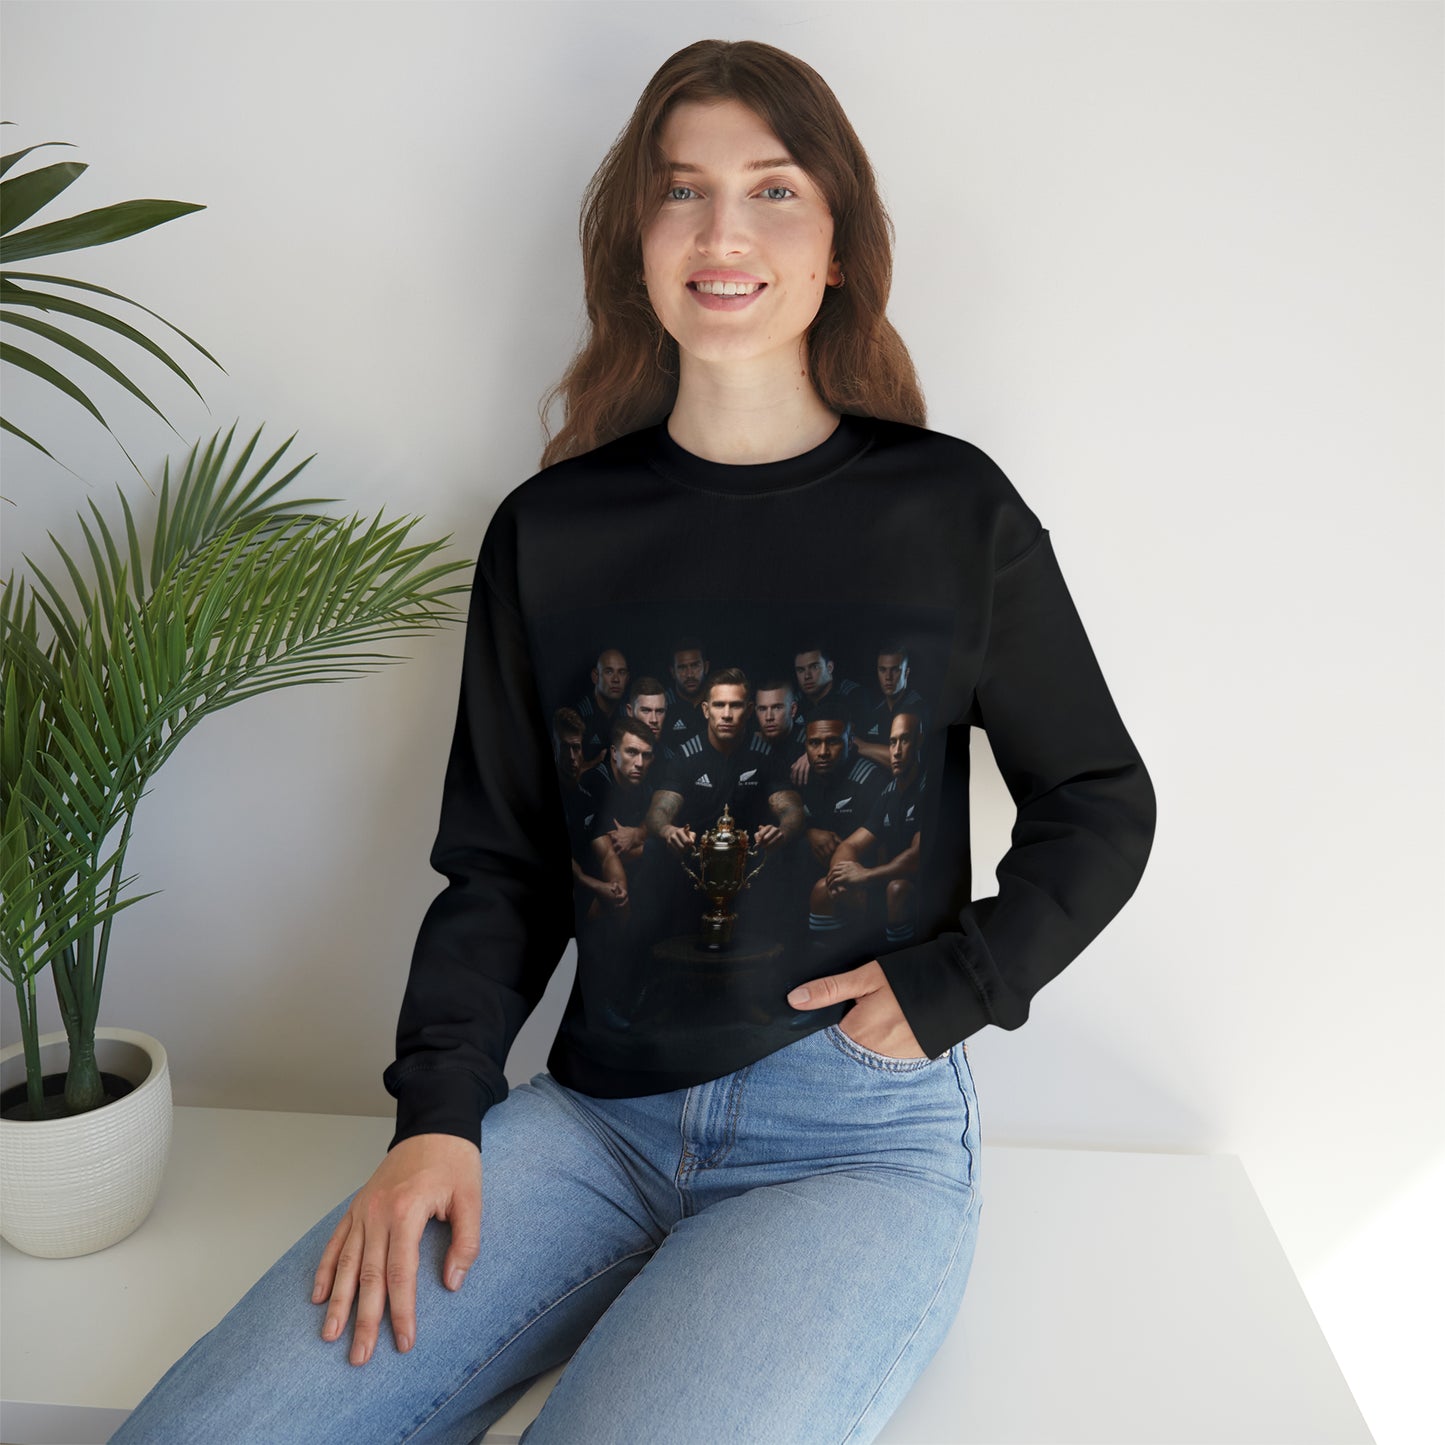 All Blacks Winners Photoshoot - black sweatshirt